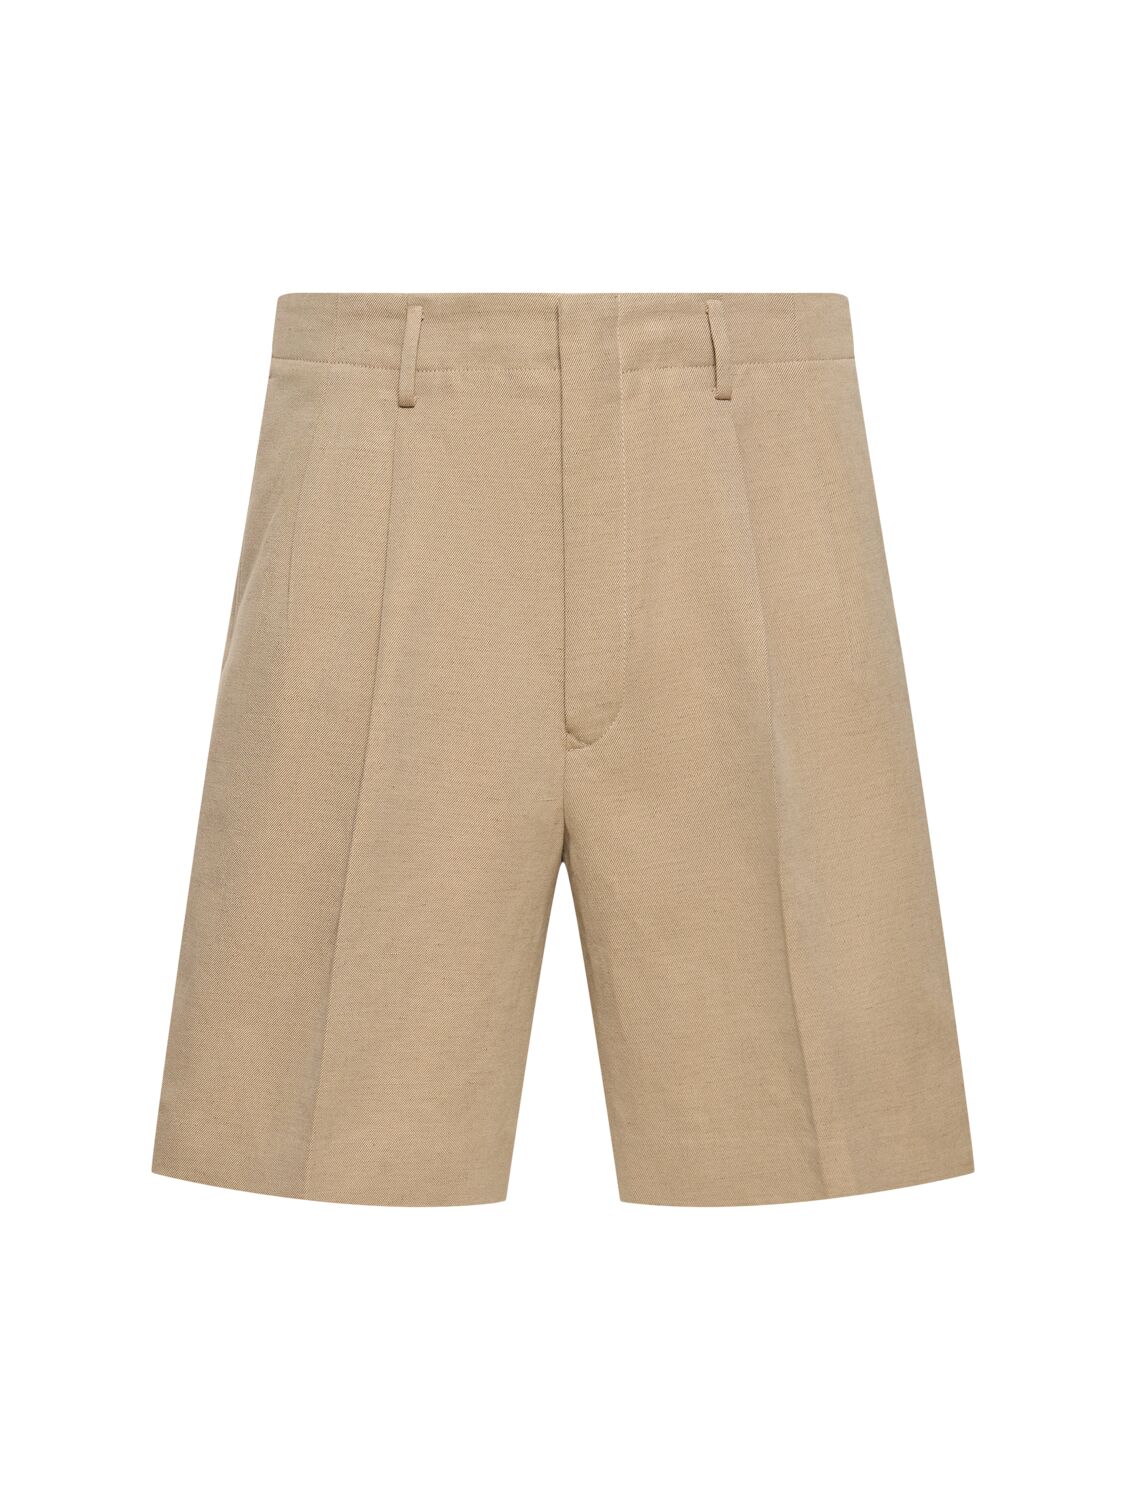 Image of Joetsu Cotton & Linen Bermuda Shorts